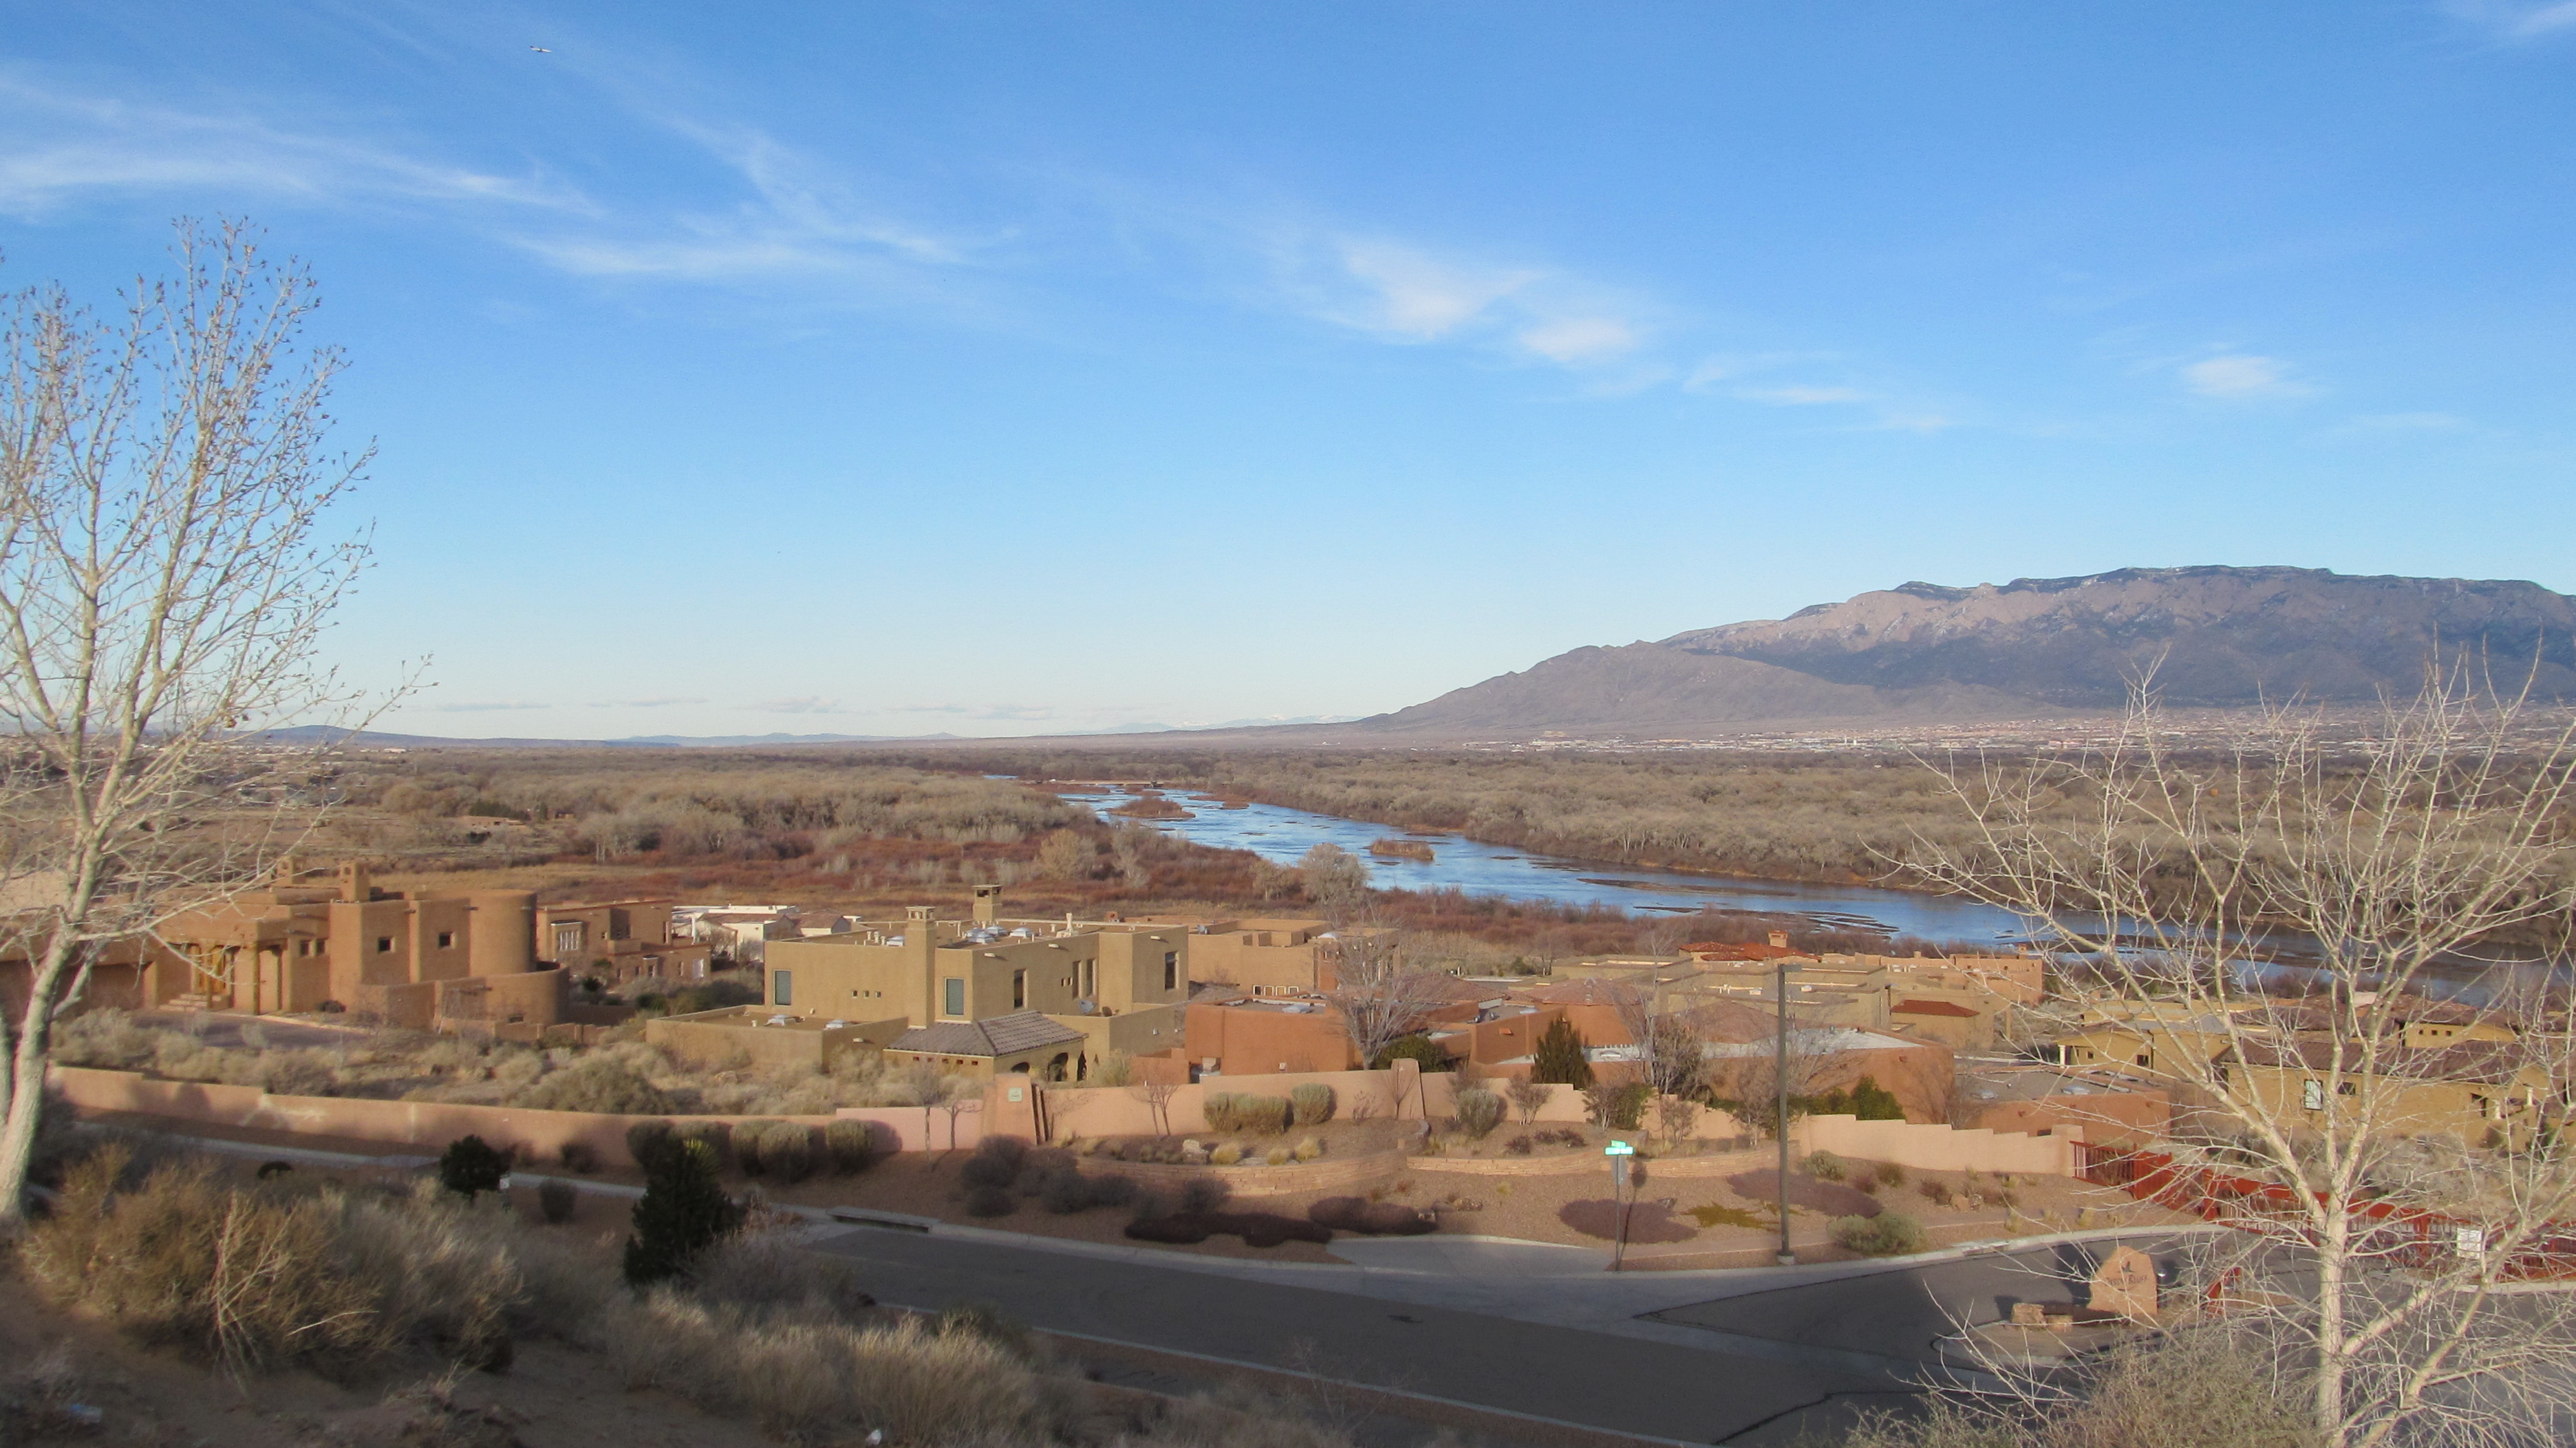 Vremea în Albuquerque de Anul Nou trecut